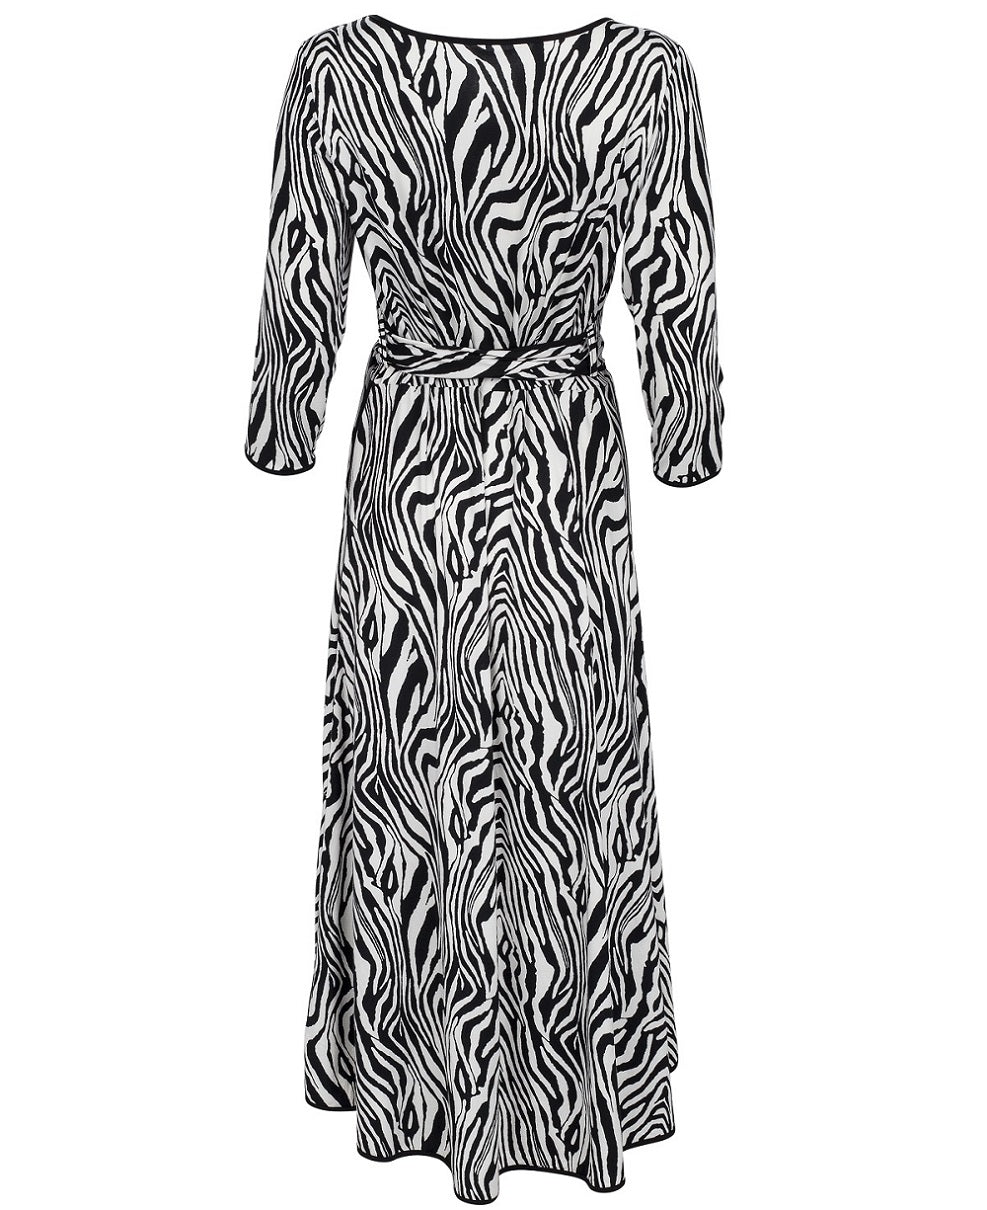 Zebra Printed Dress